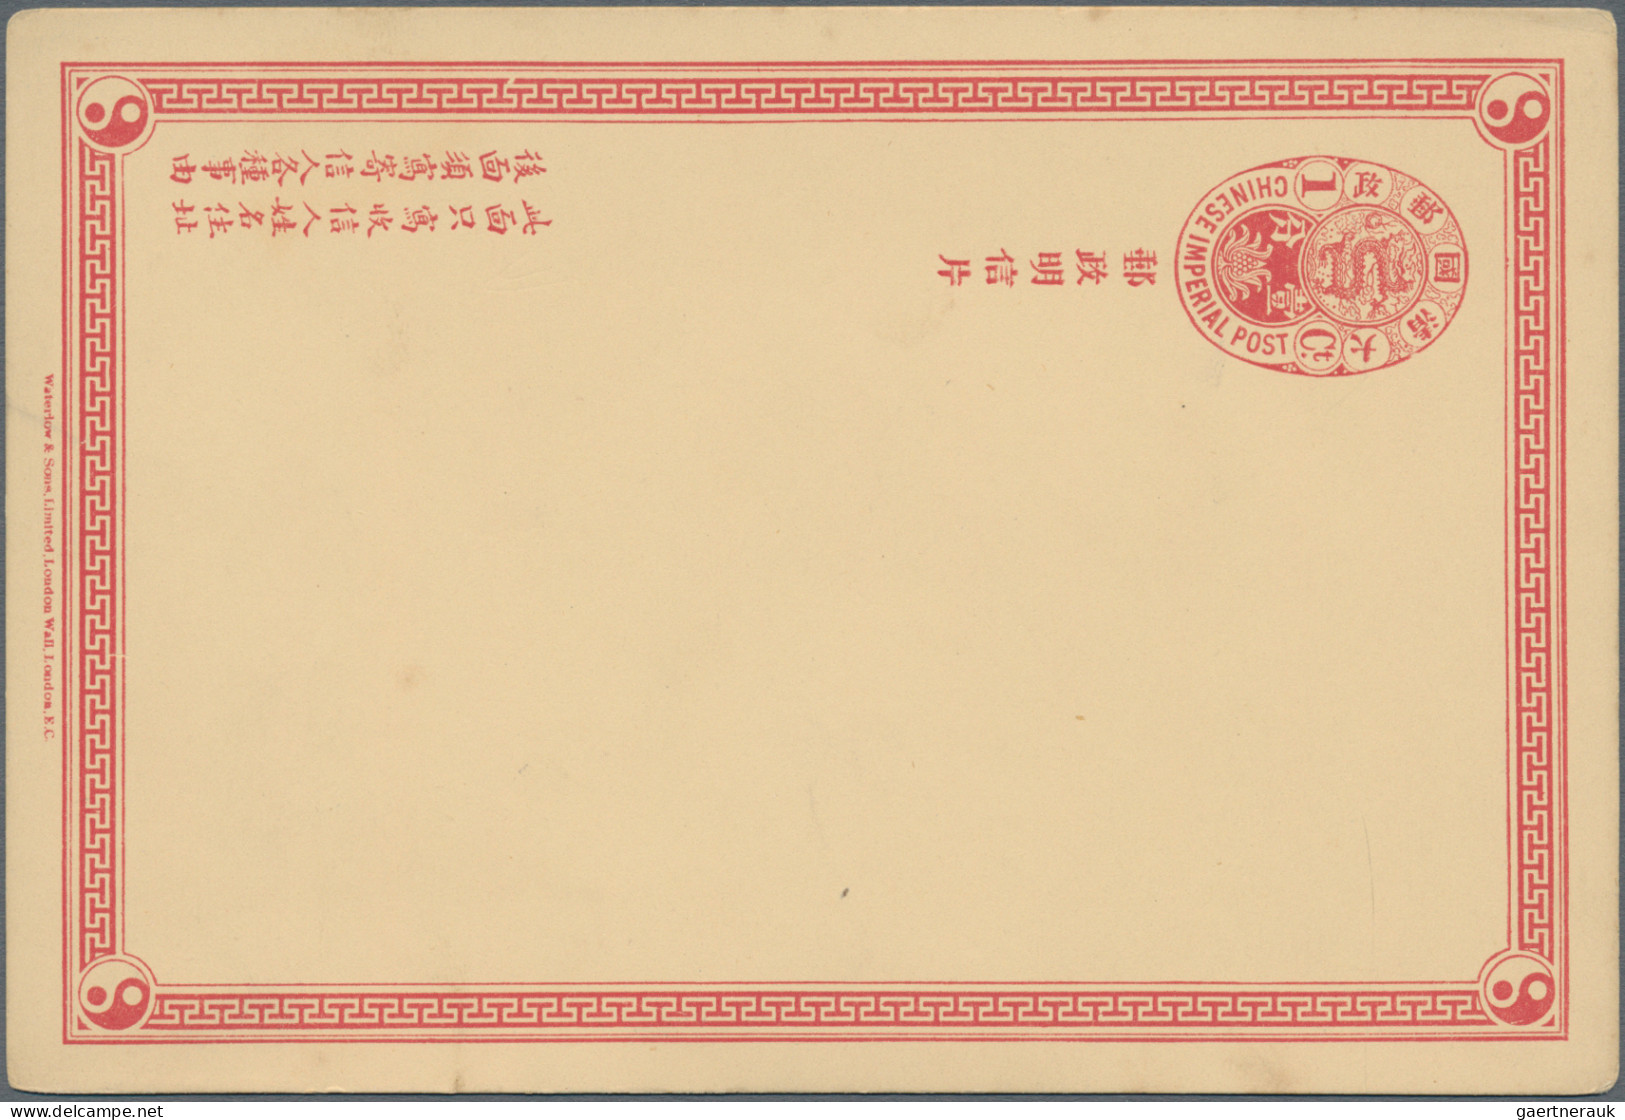 China - Postal stationery: 1890/1925 (approx.), group of 18 postal stationery it